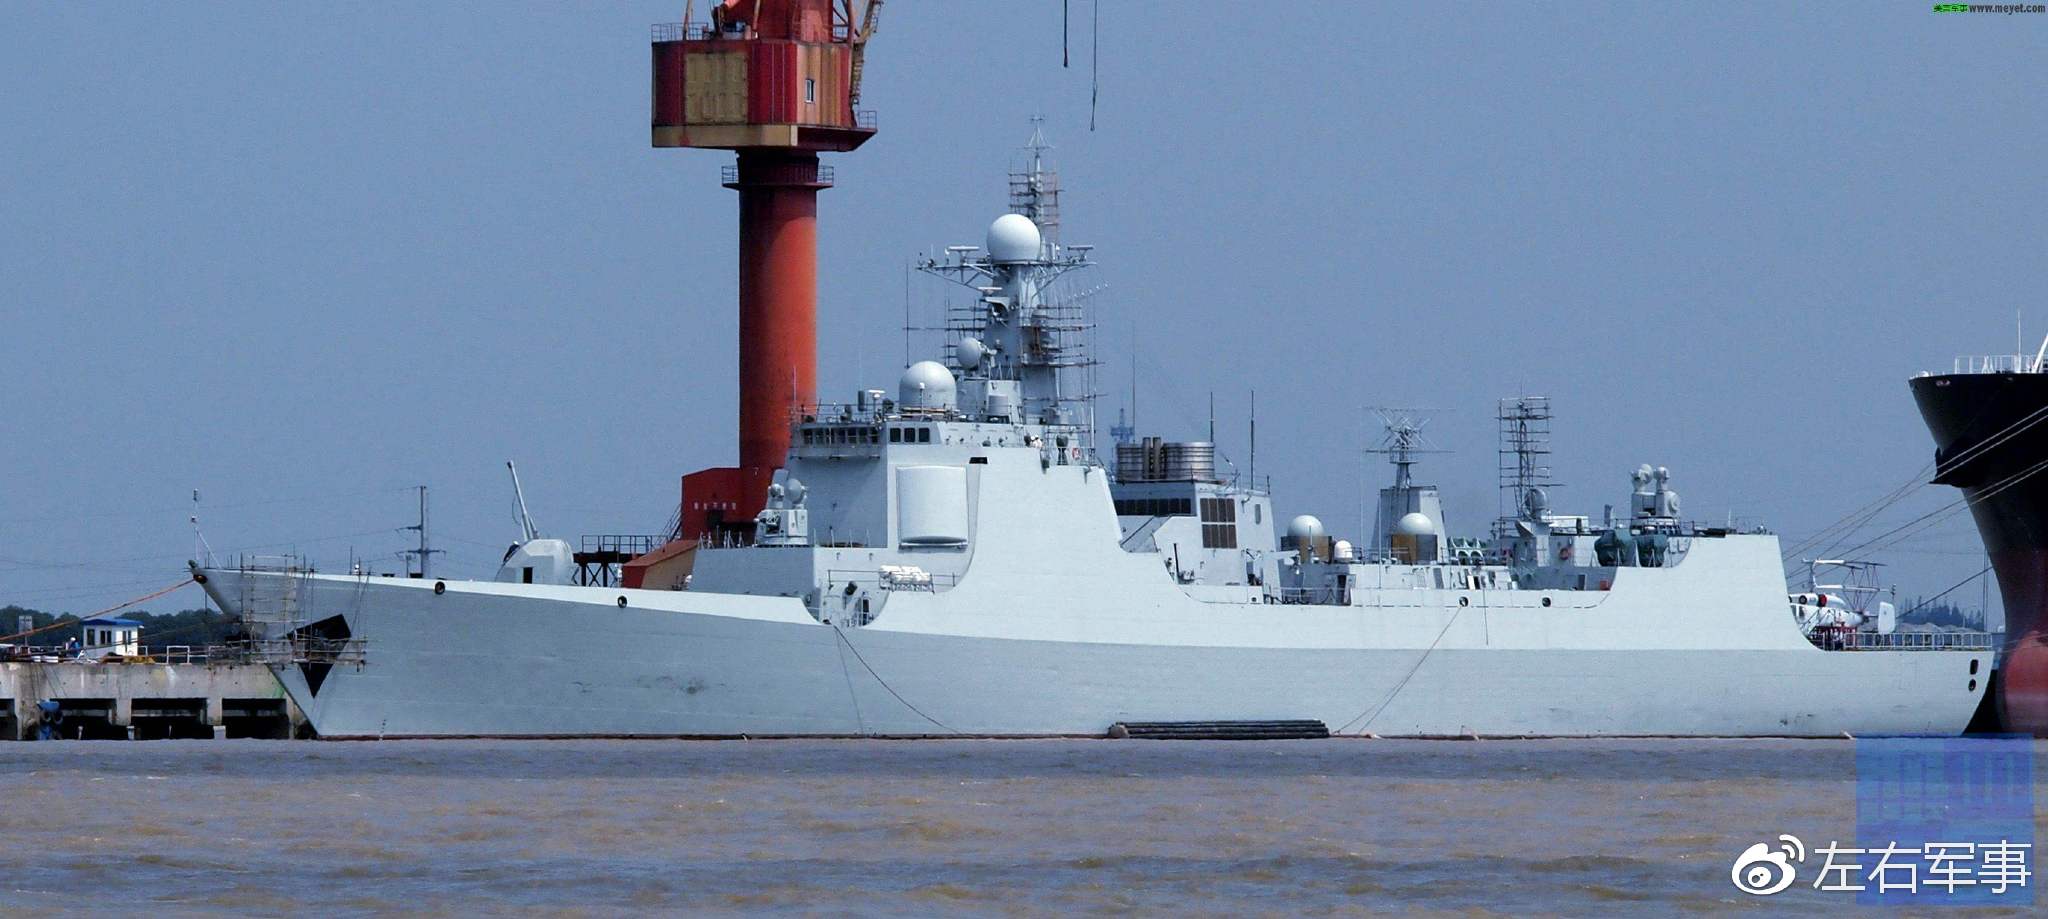 052c型驱逐舰 造价25亿(英语:type 052c destroyer,北约代号:luyang